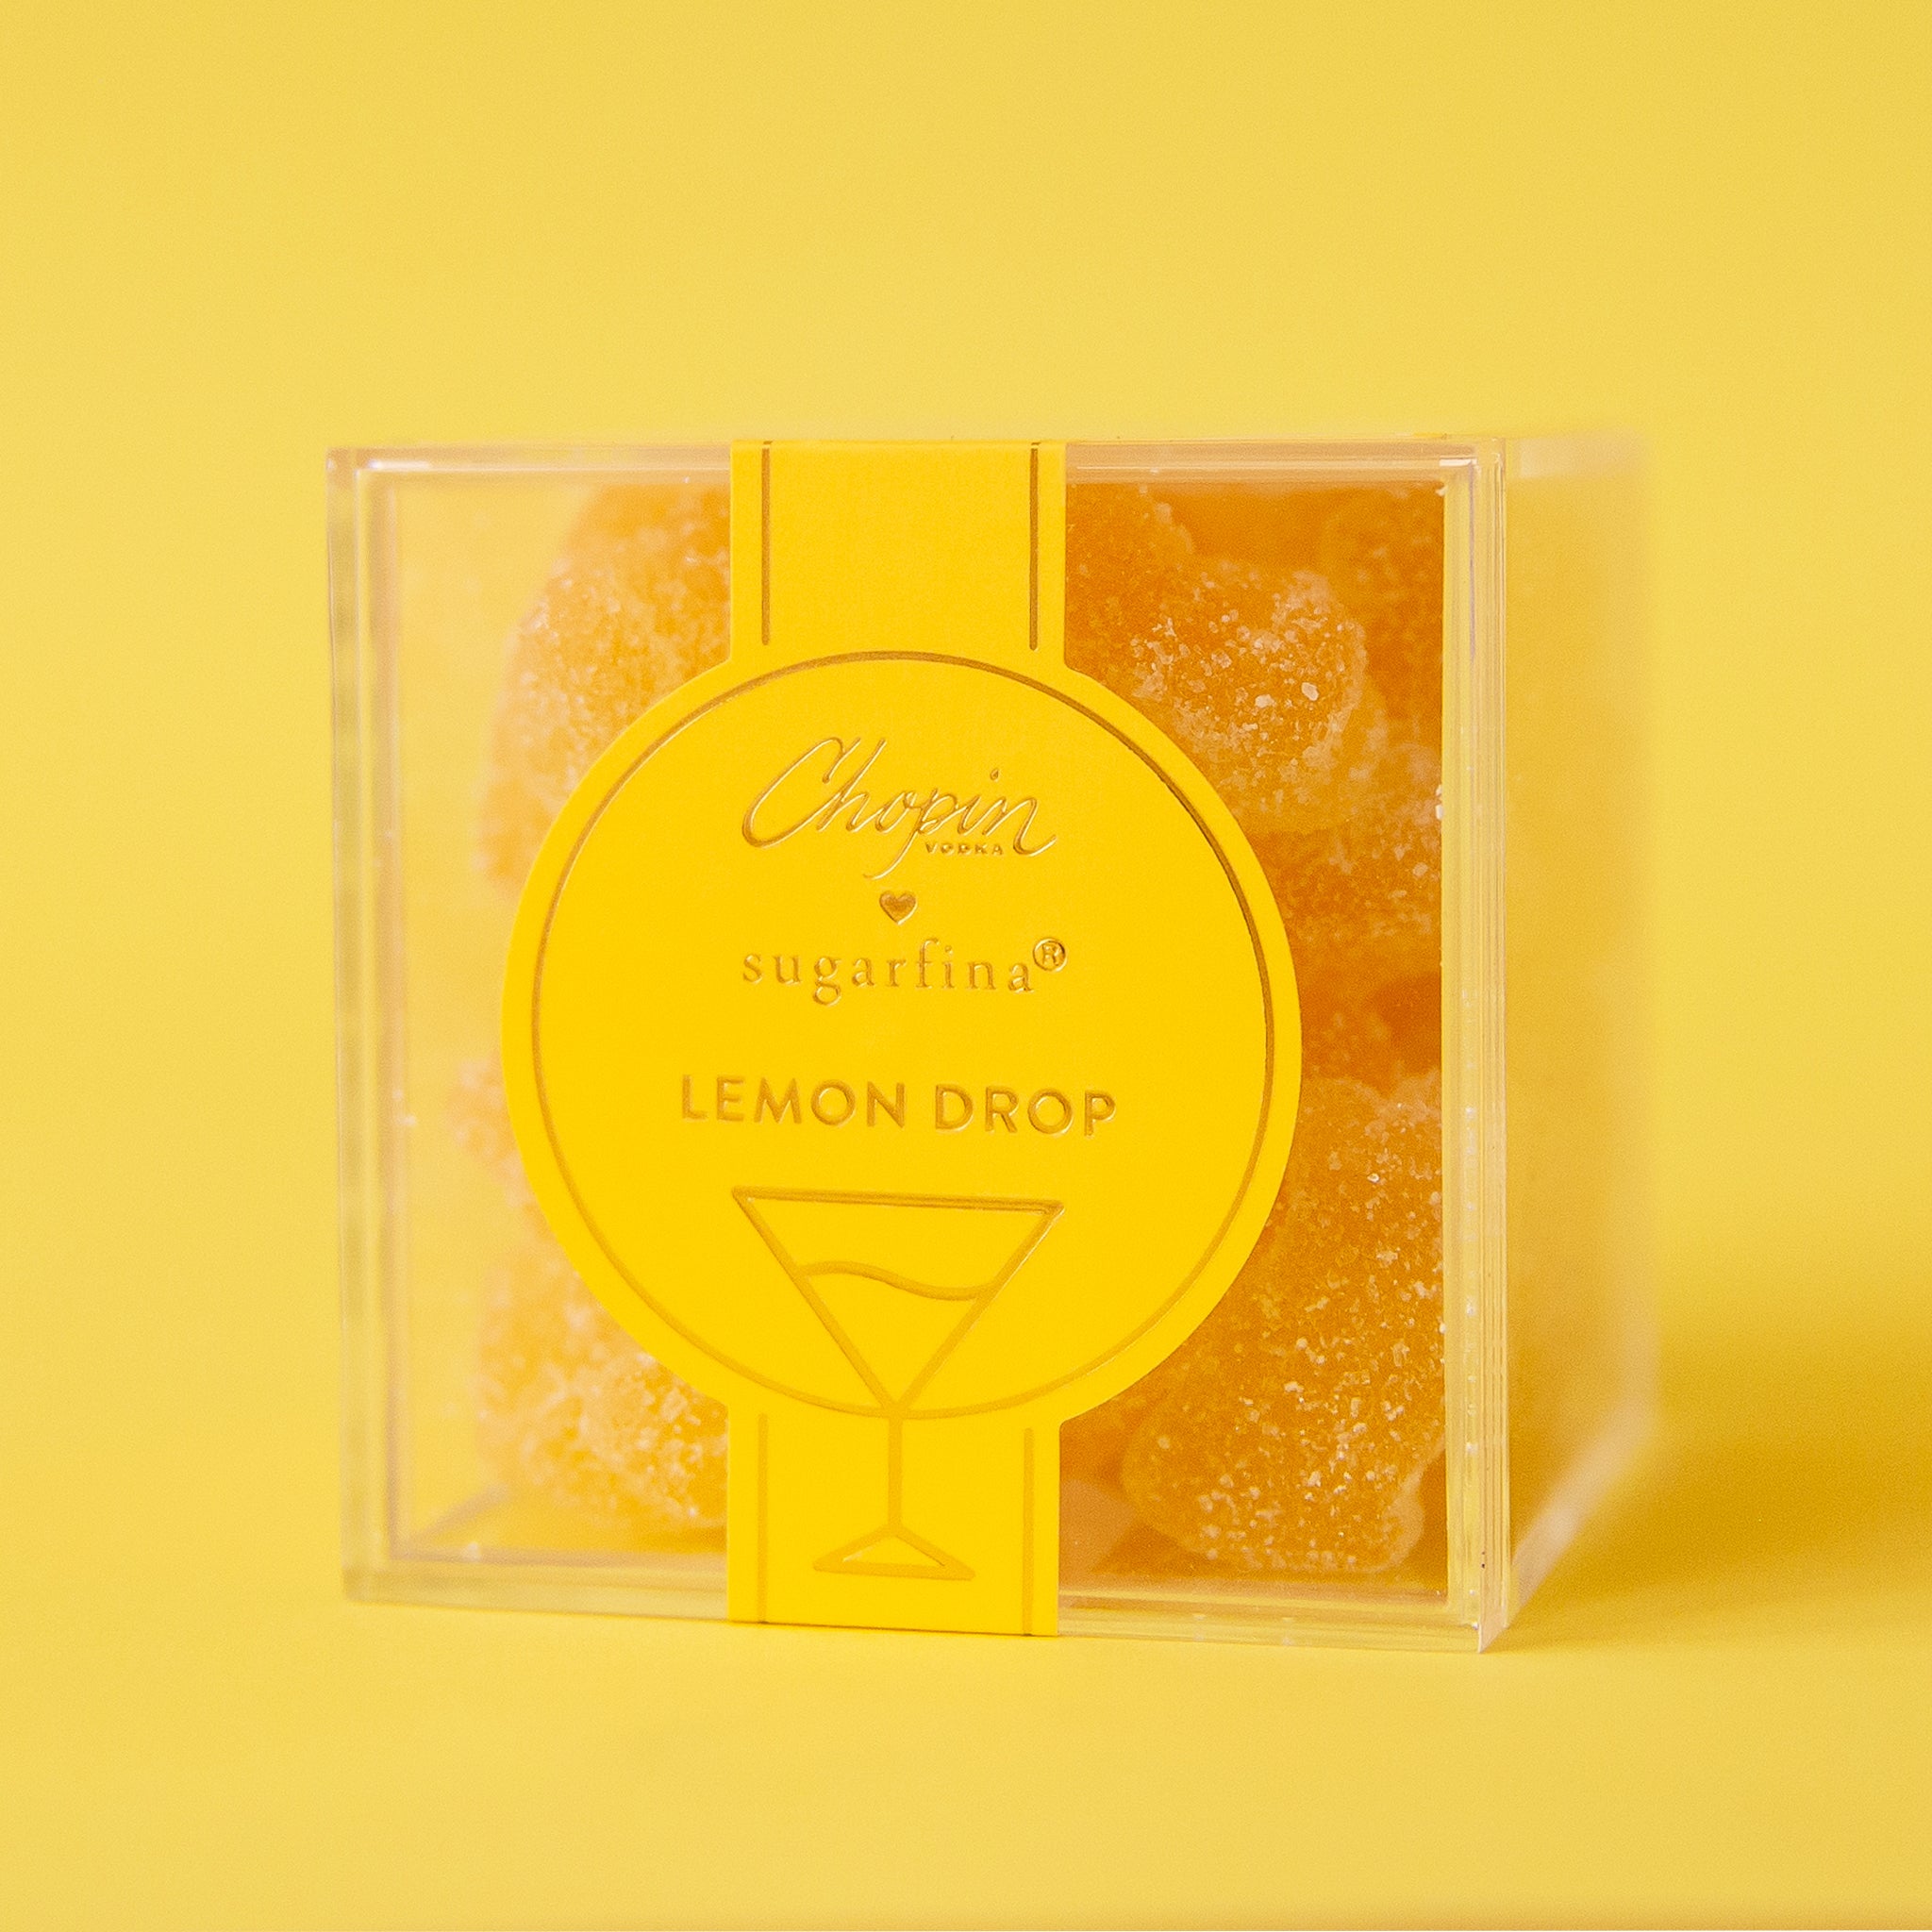 A clear acrylic box of yellow lemon drop flavored gummy bears.